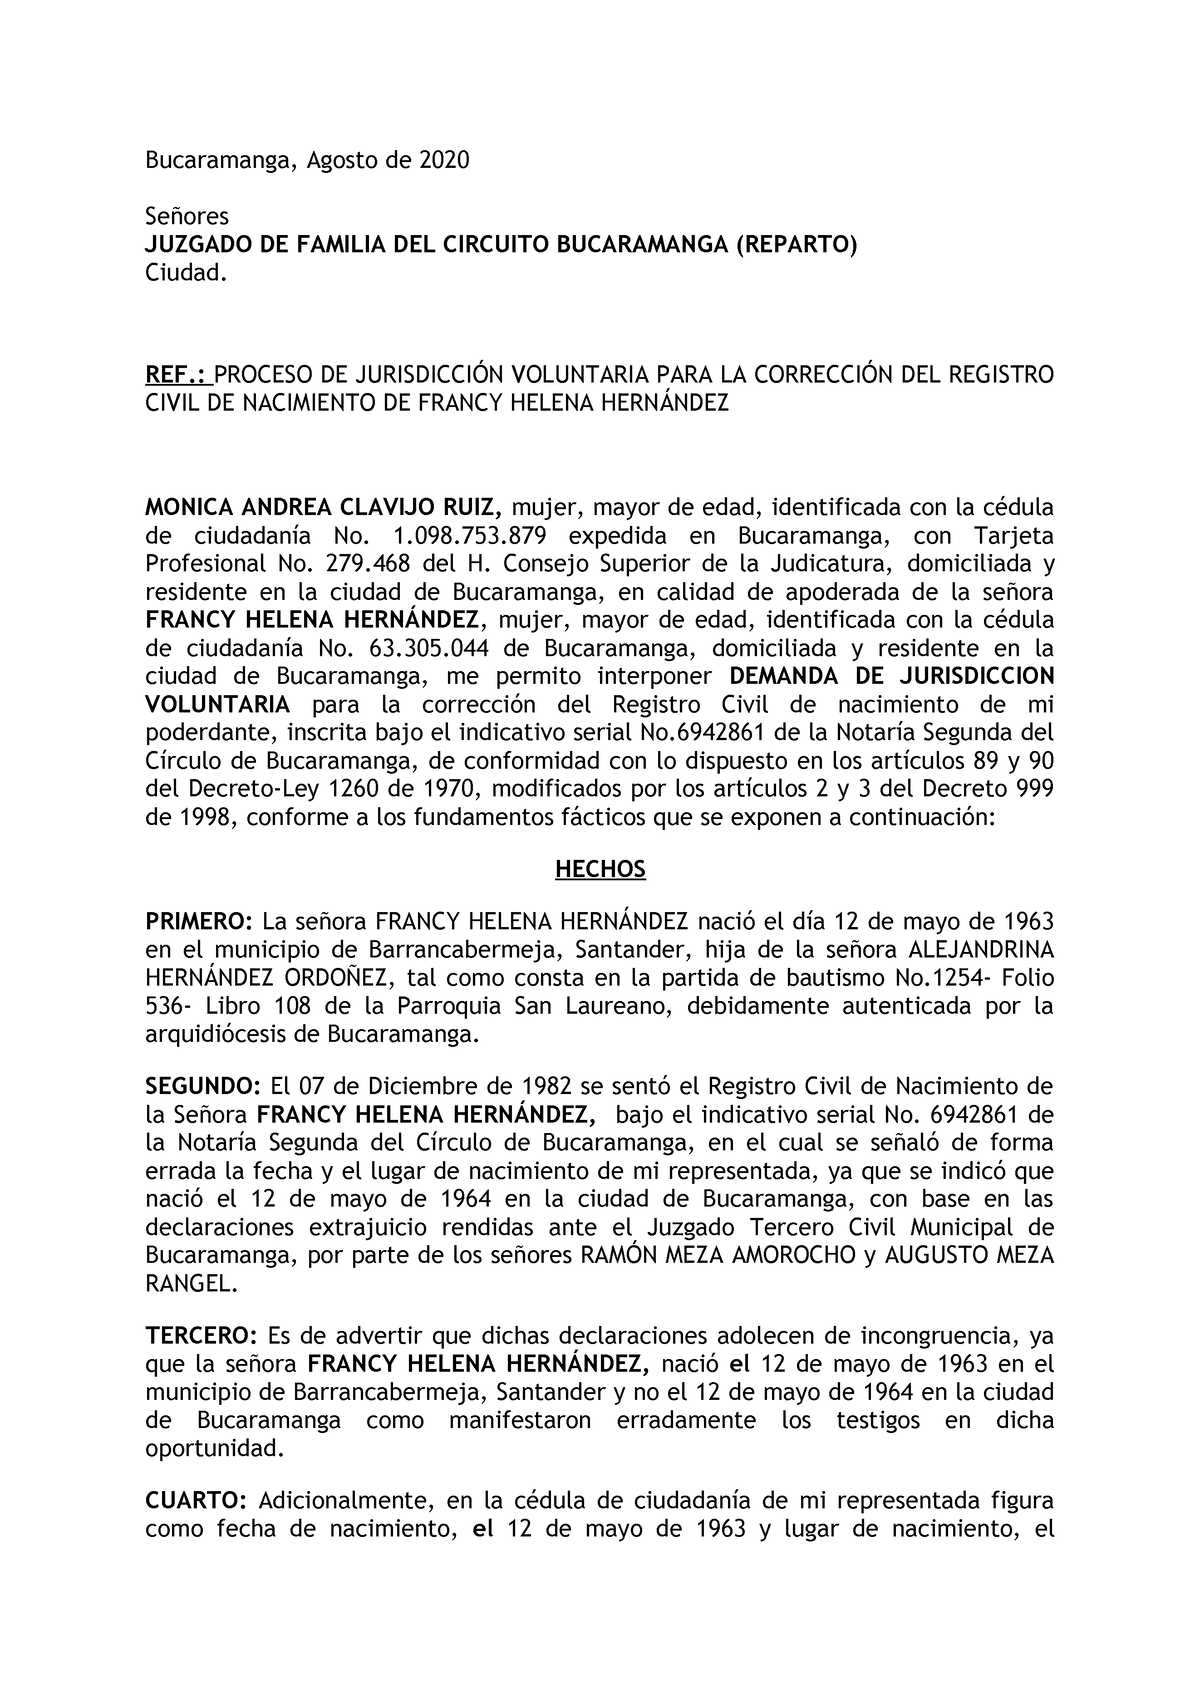 Demanda- Proceso Jurisdiccion Voluntaria - Bucaramanga, Agosto de 2020  Señores JUZGADO DE FAMILIA - Studocu